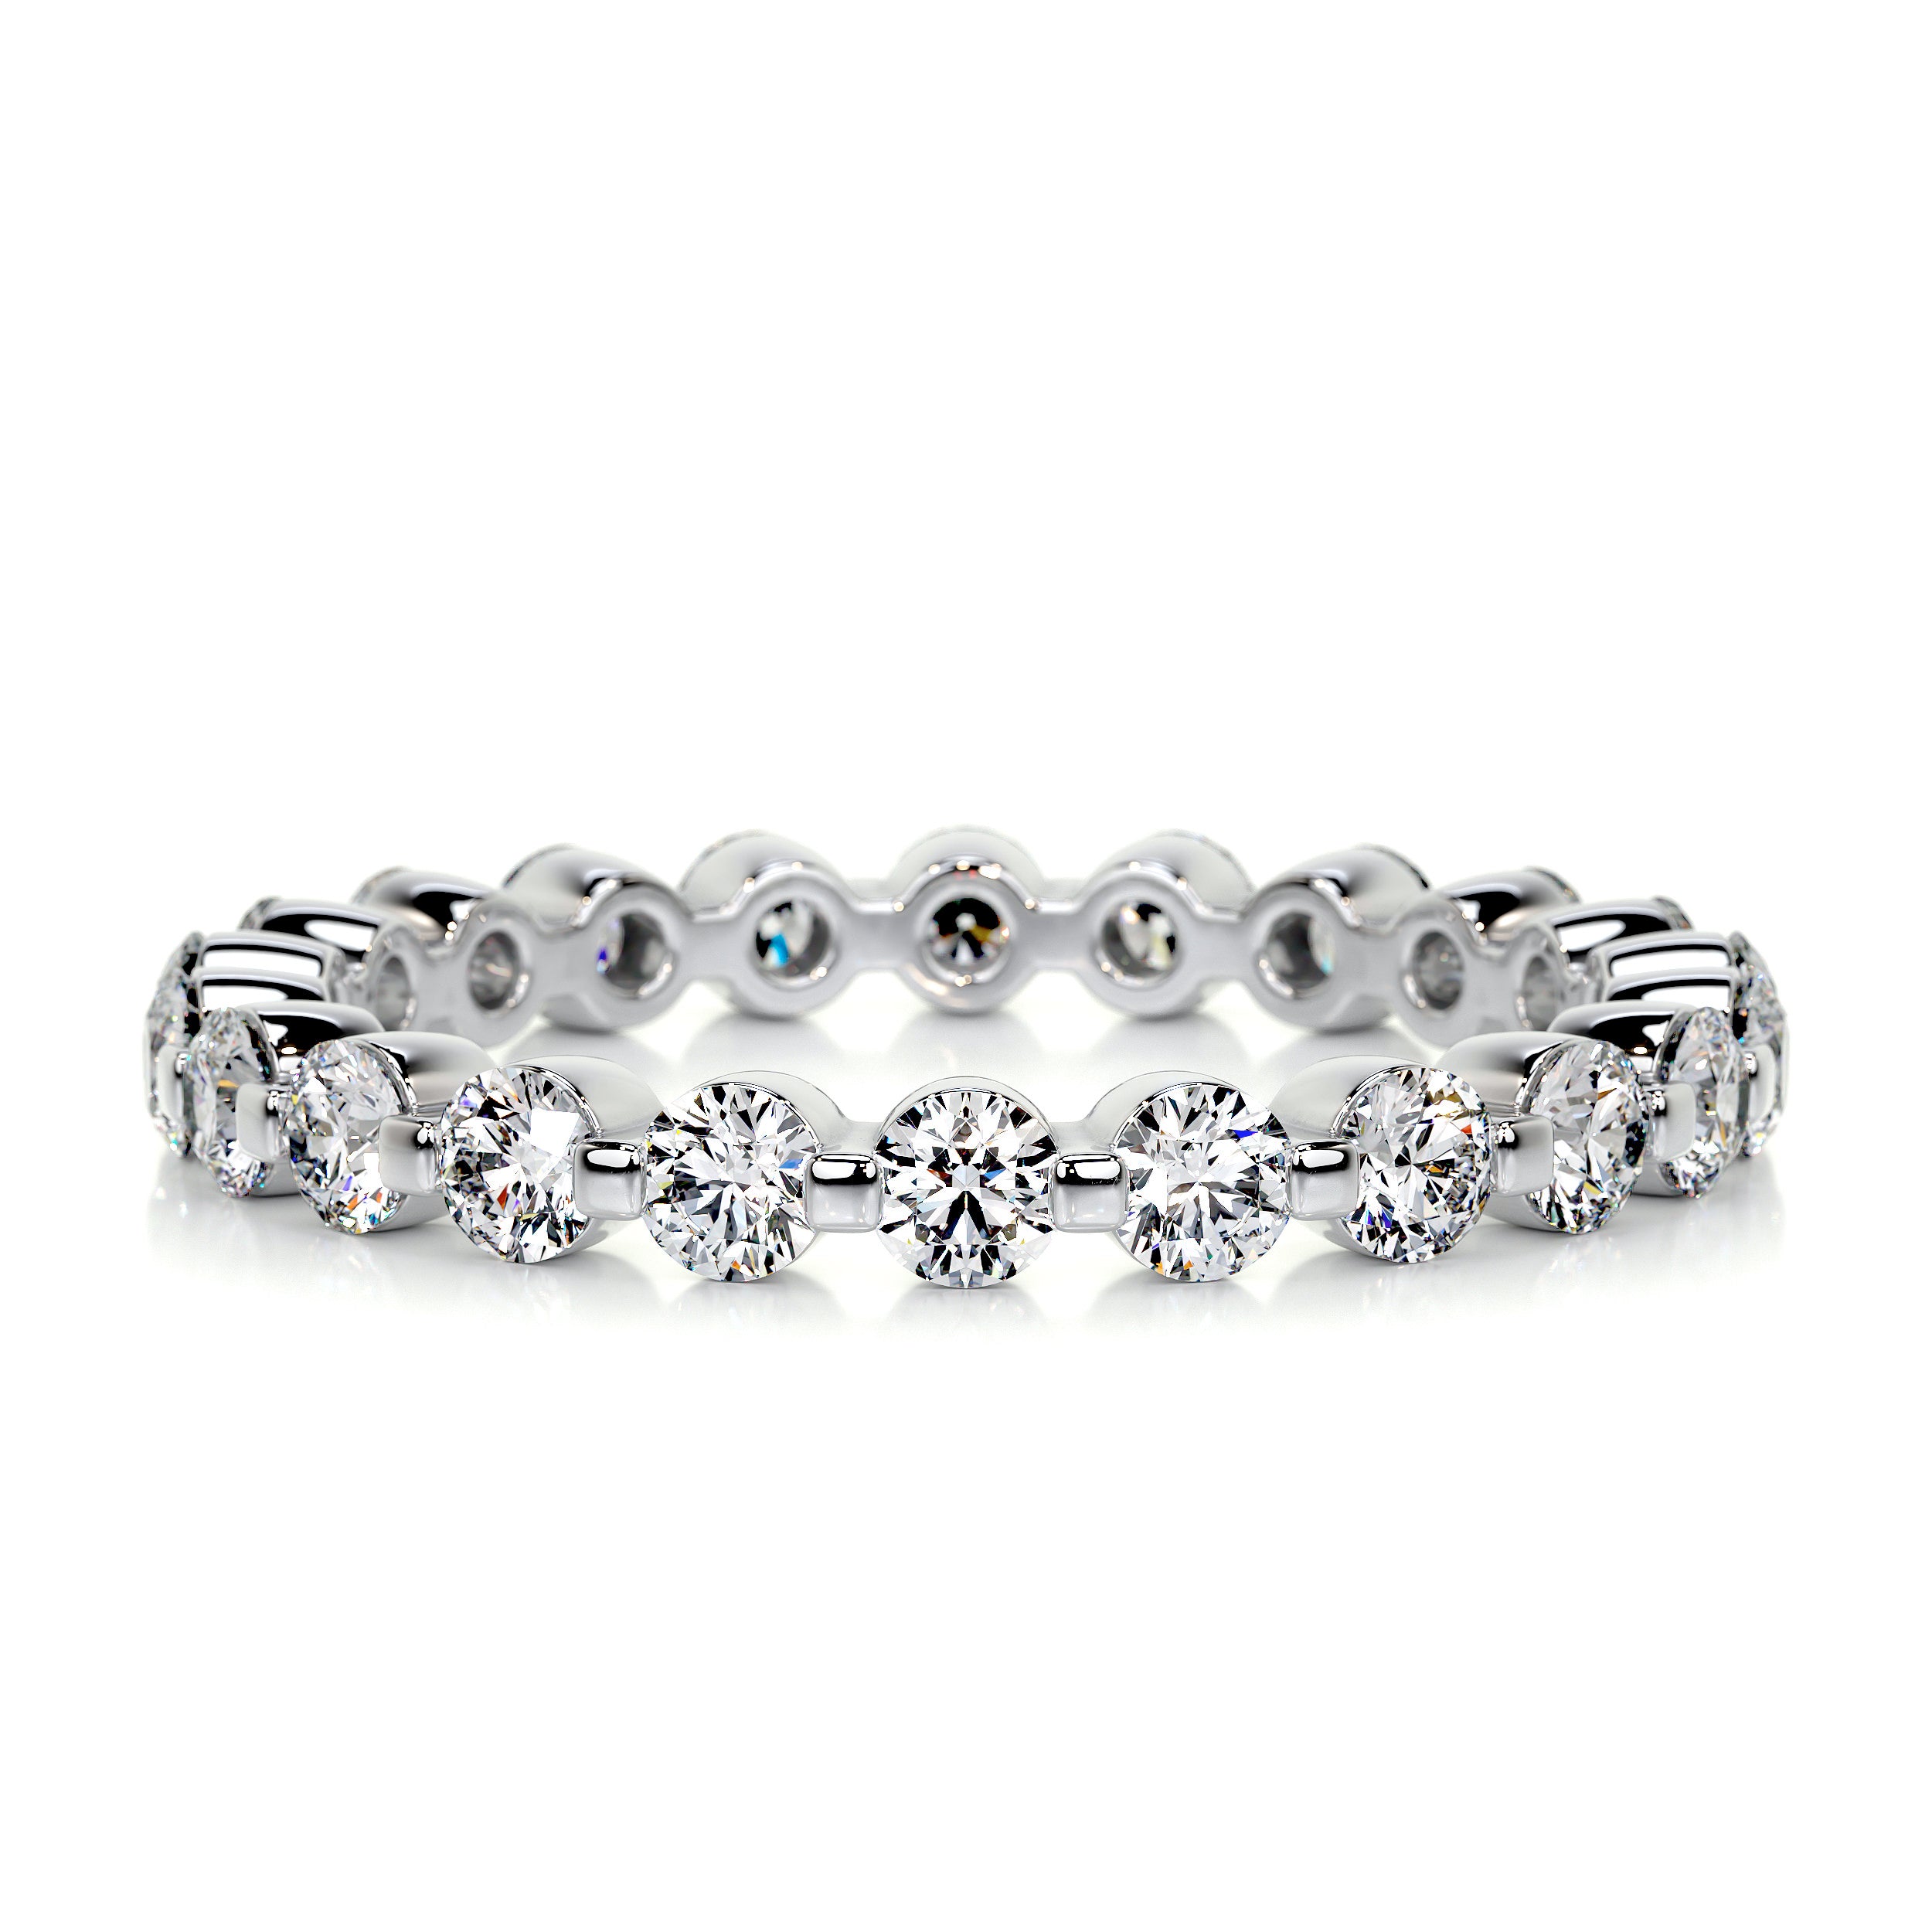 Josie Eternity Wedding Ring   (1 Carat) -14K White Gold